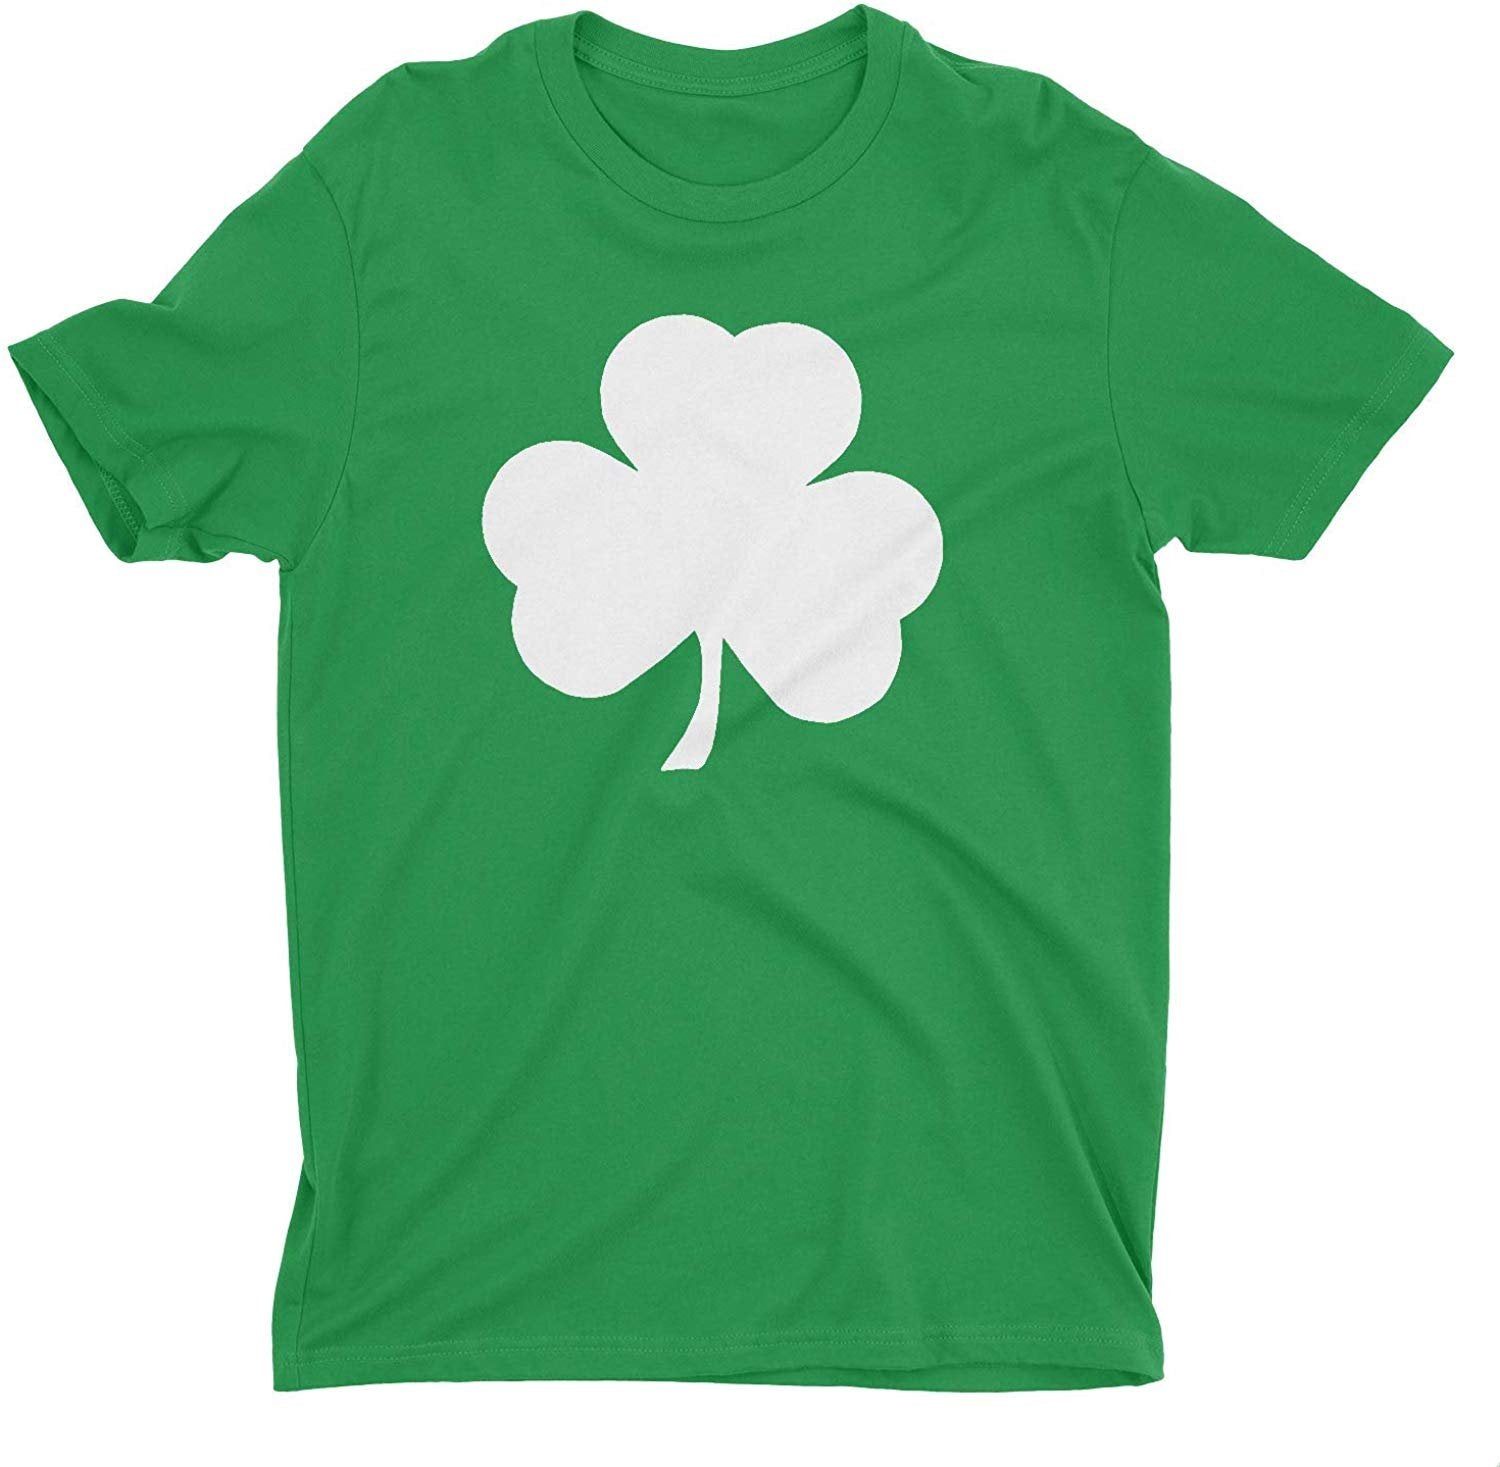 T-shirt pour enfants Shamrock (grand design solide, vert irlandais)